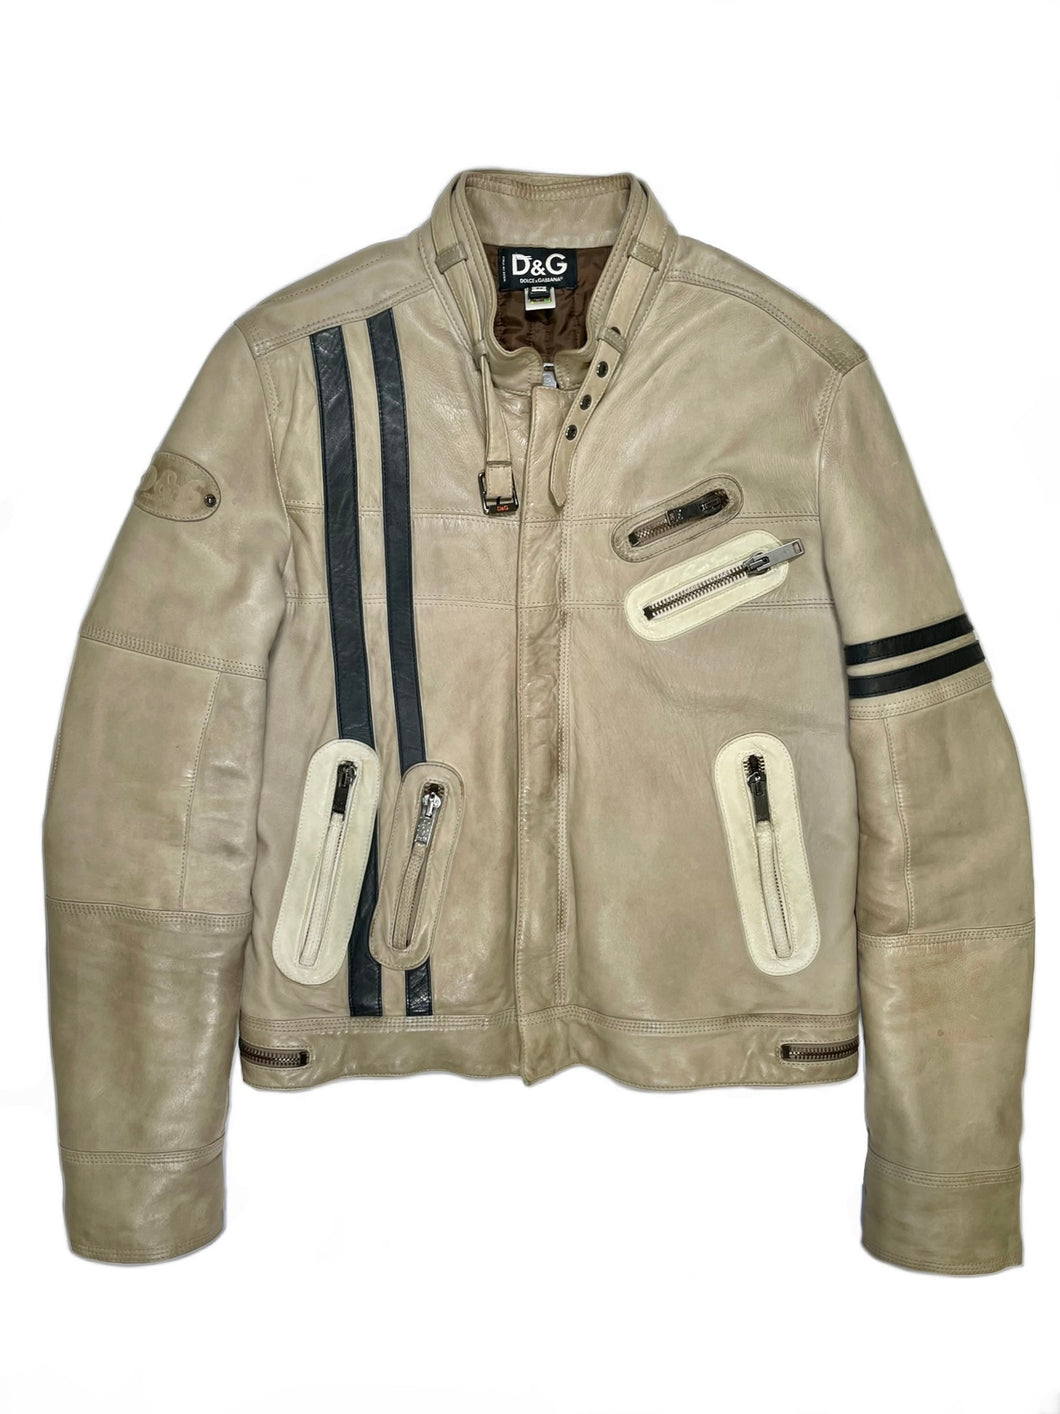 2000’s Dolce & Gabbana biker leather jacket